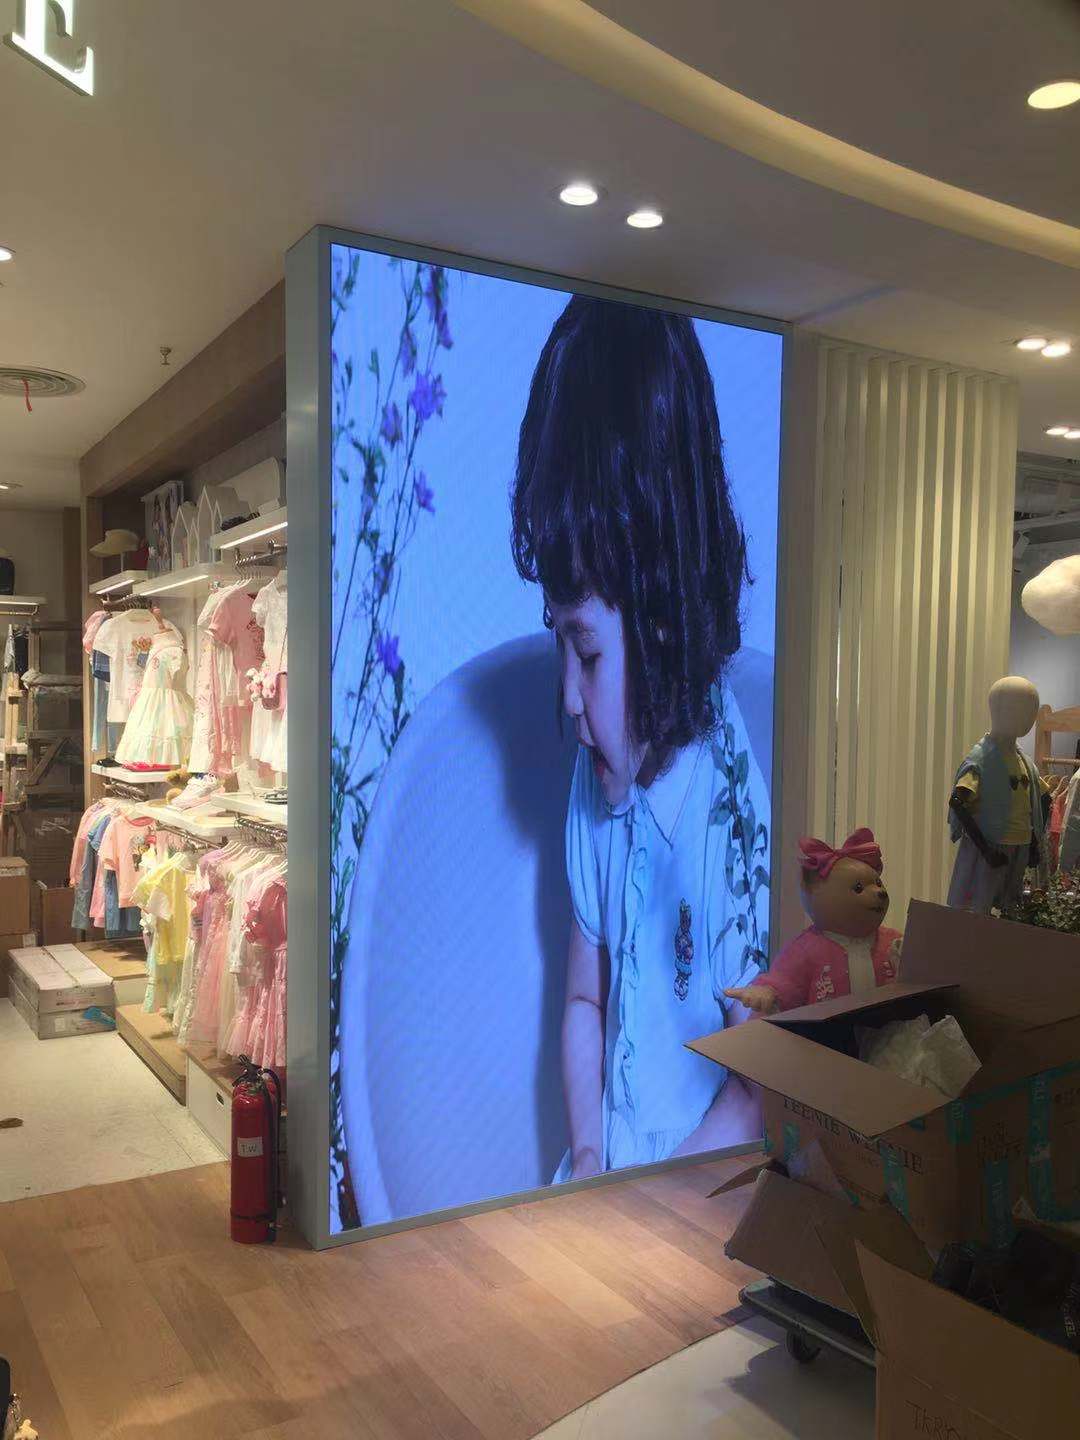  福州市东百购物广场某童装LED显示屏项目 